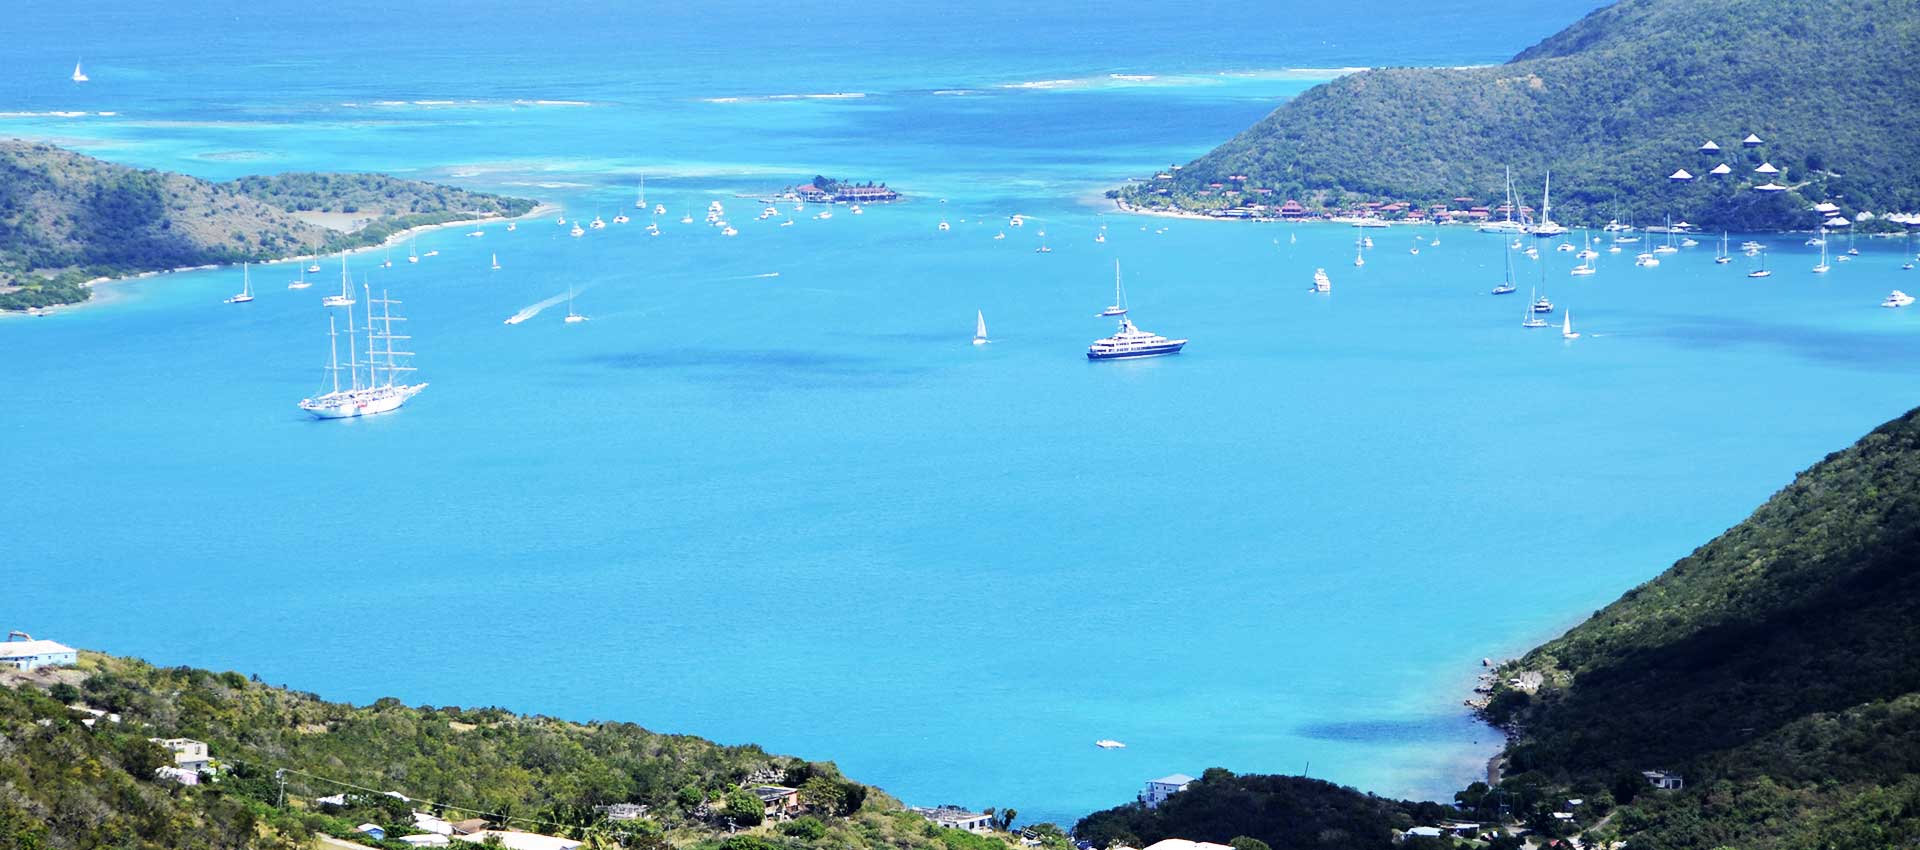 Sailing ship cruise: Virgin Islands and Guadeloupe, Caribbean